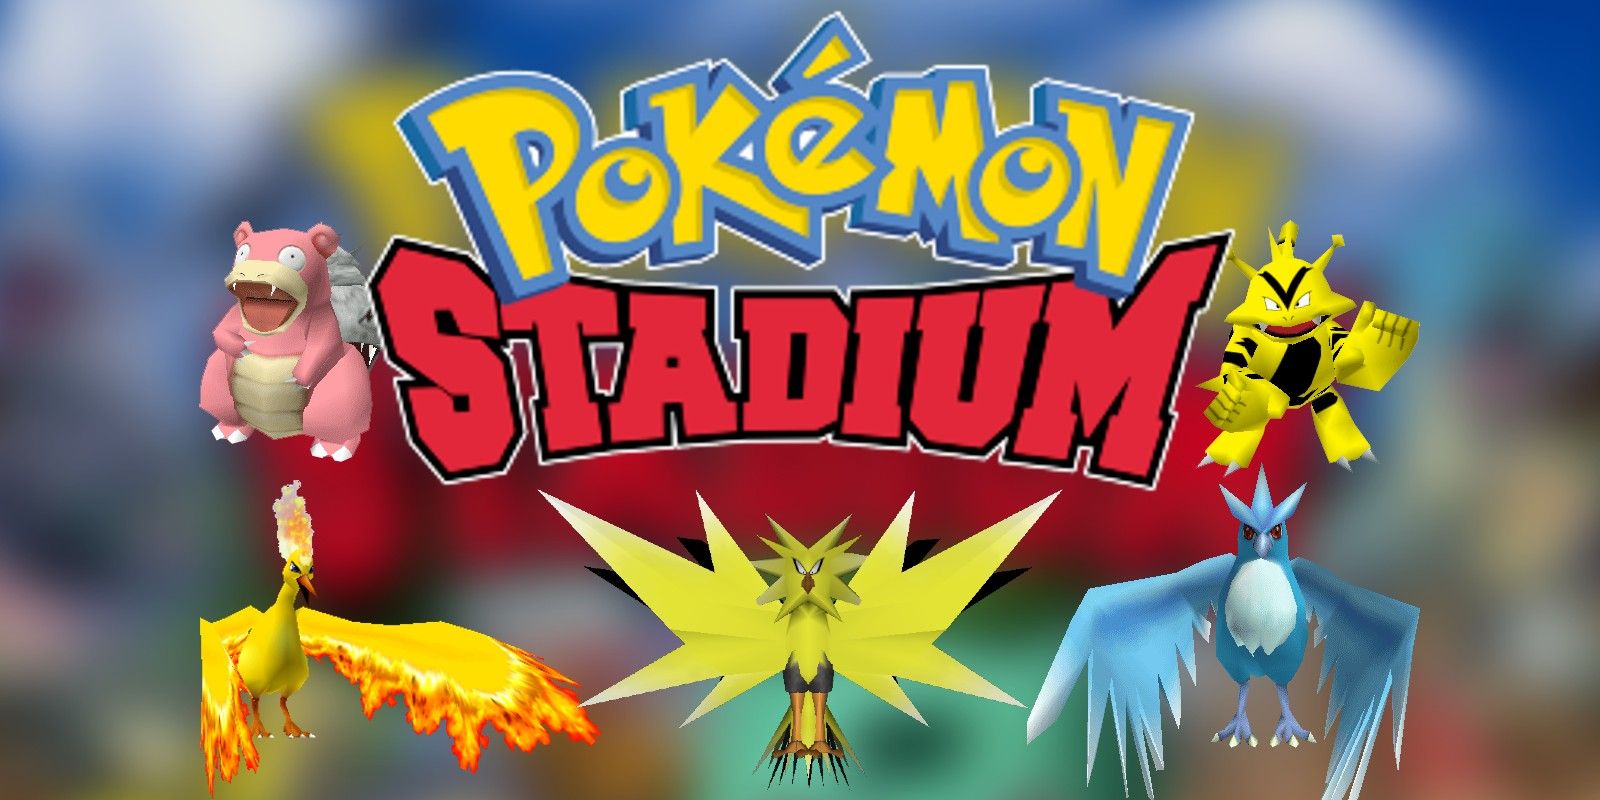 Pokémon Stadium 2 and Pokémon Trading Card Game Join NSO